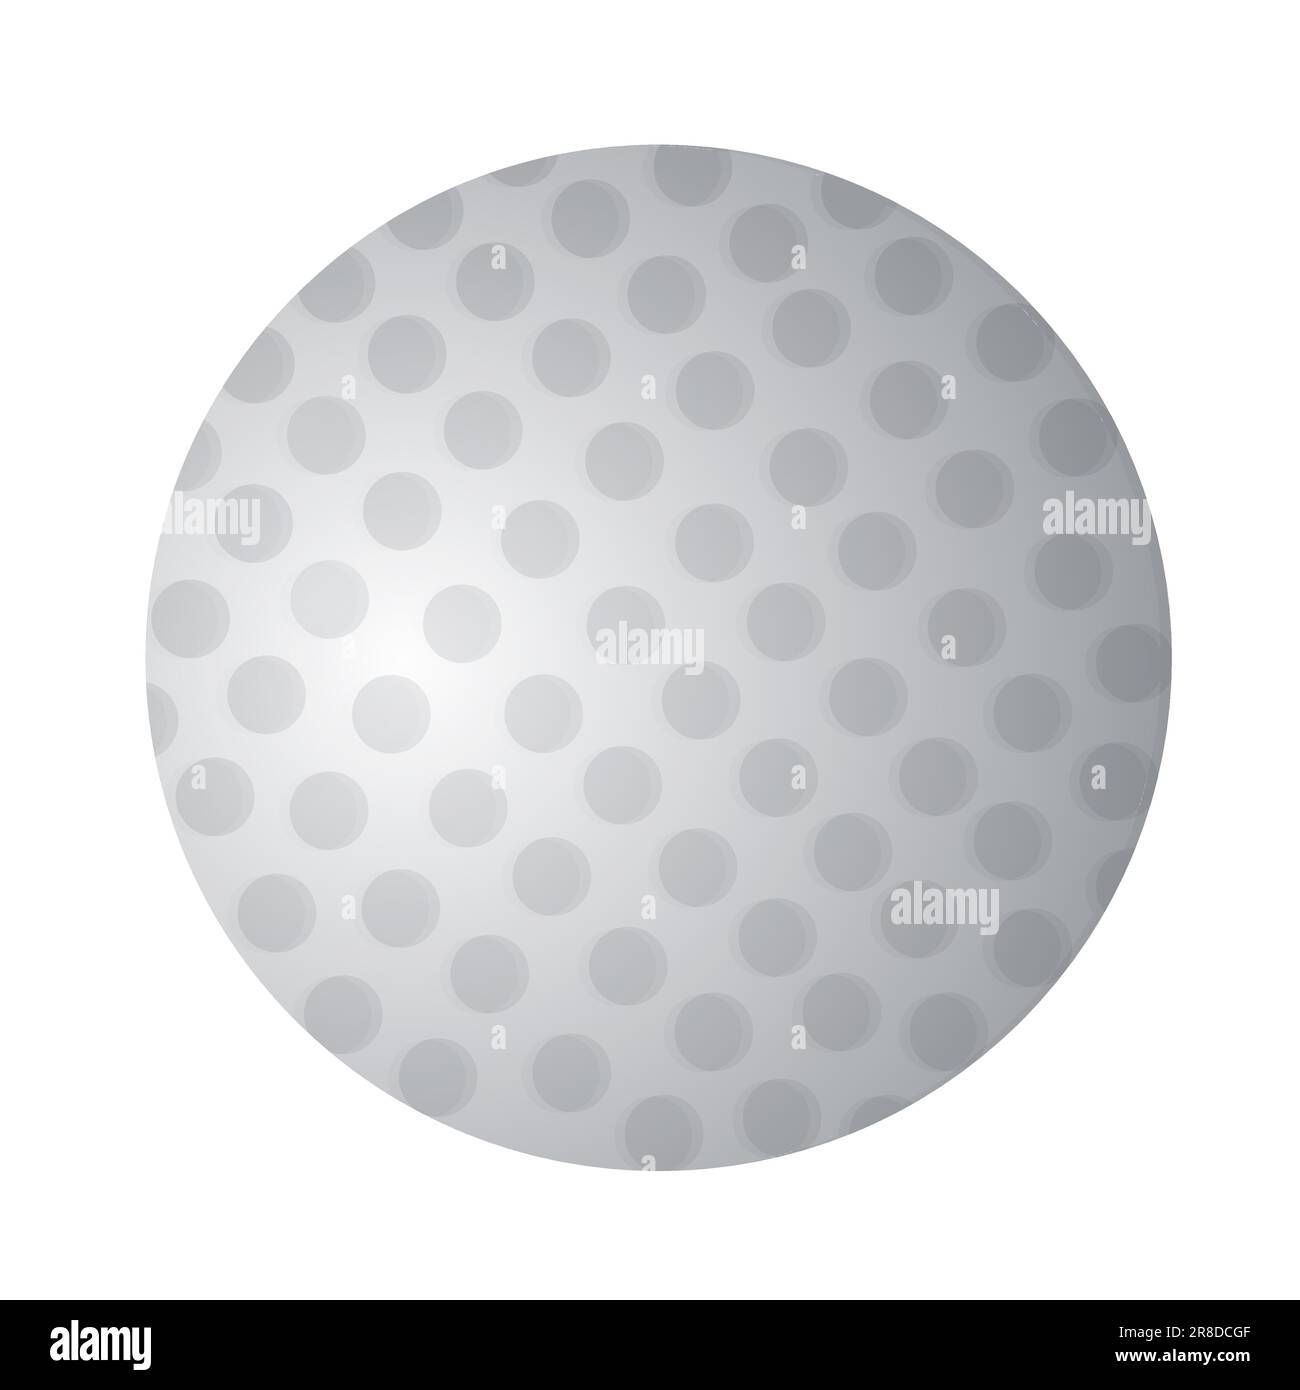 Golf ball - modern flat design style single isolated image Stock Vector